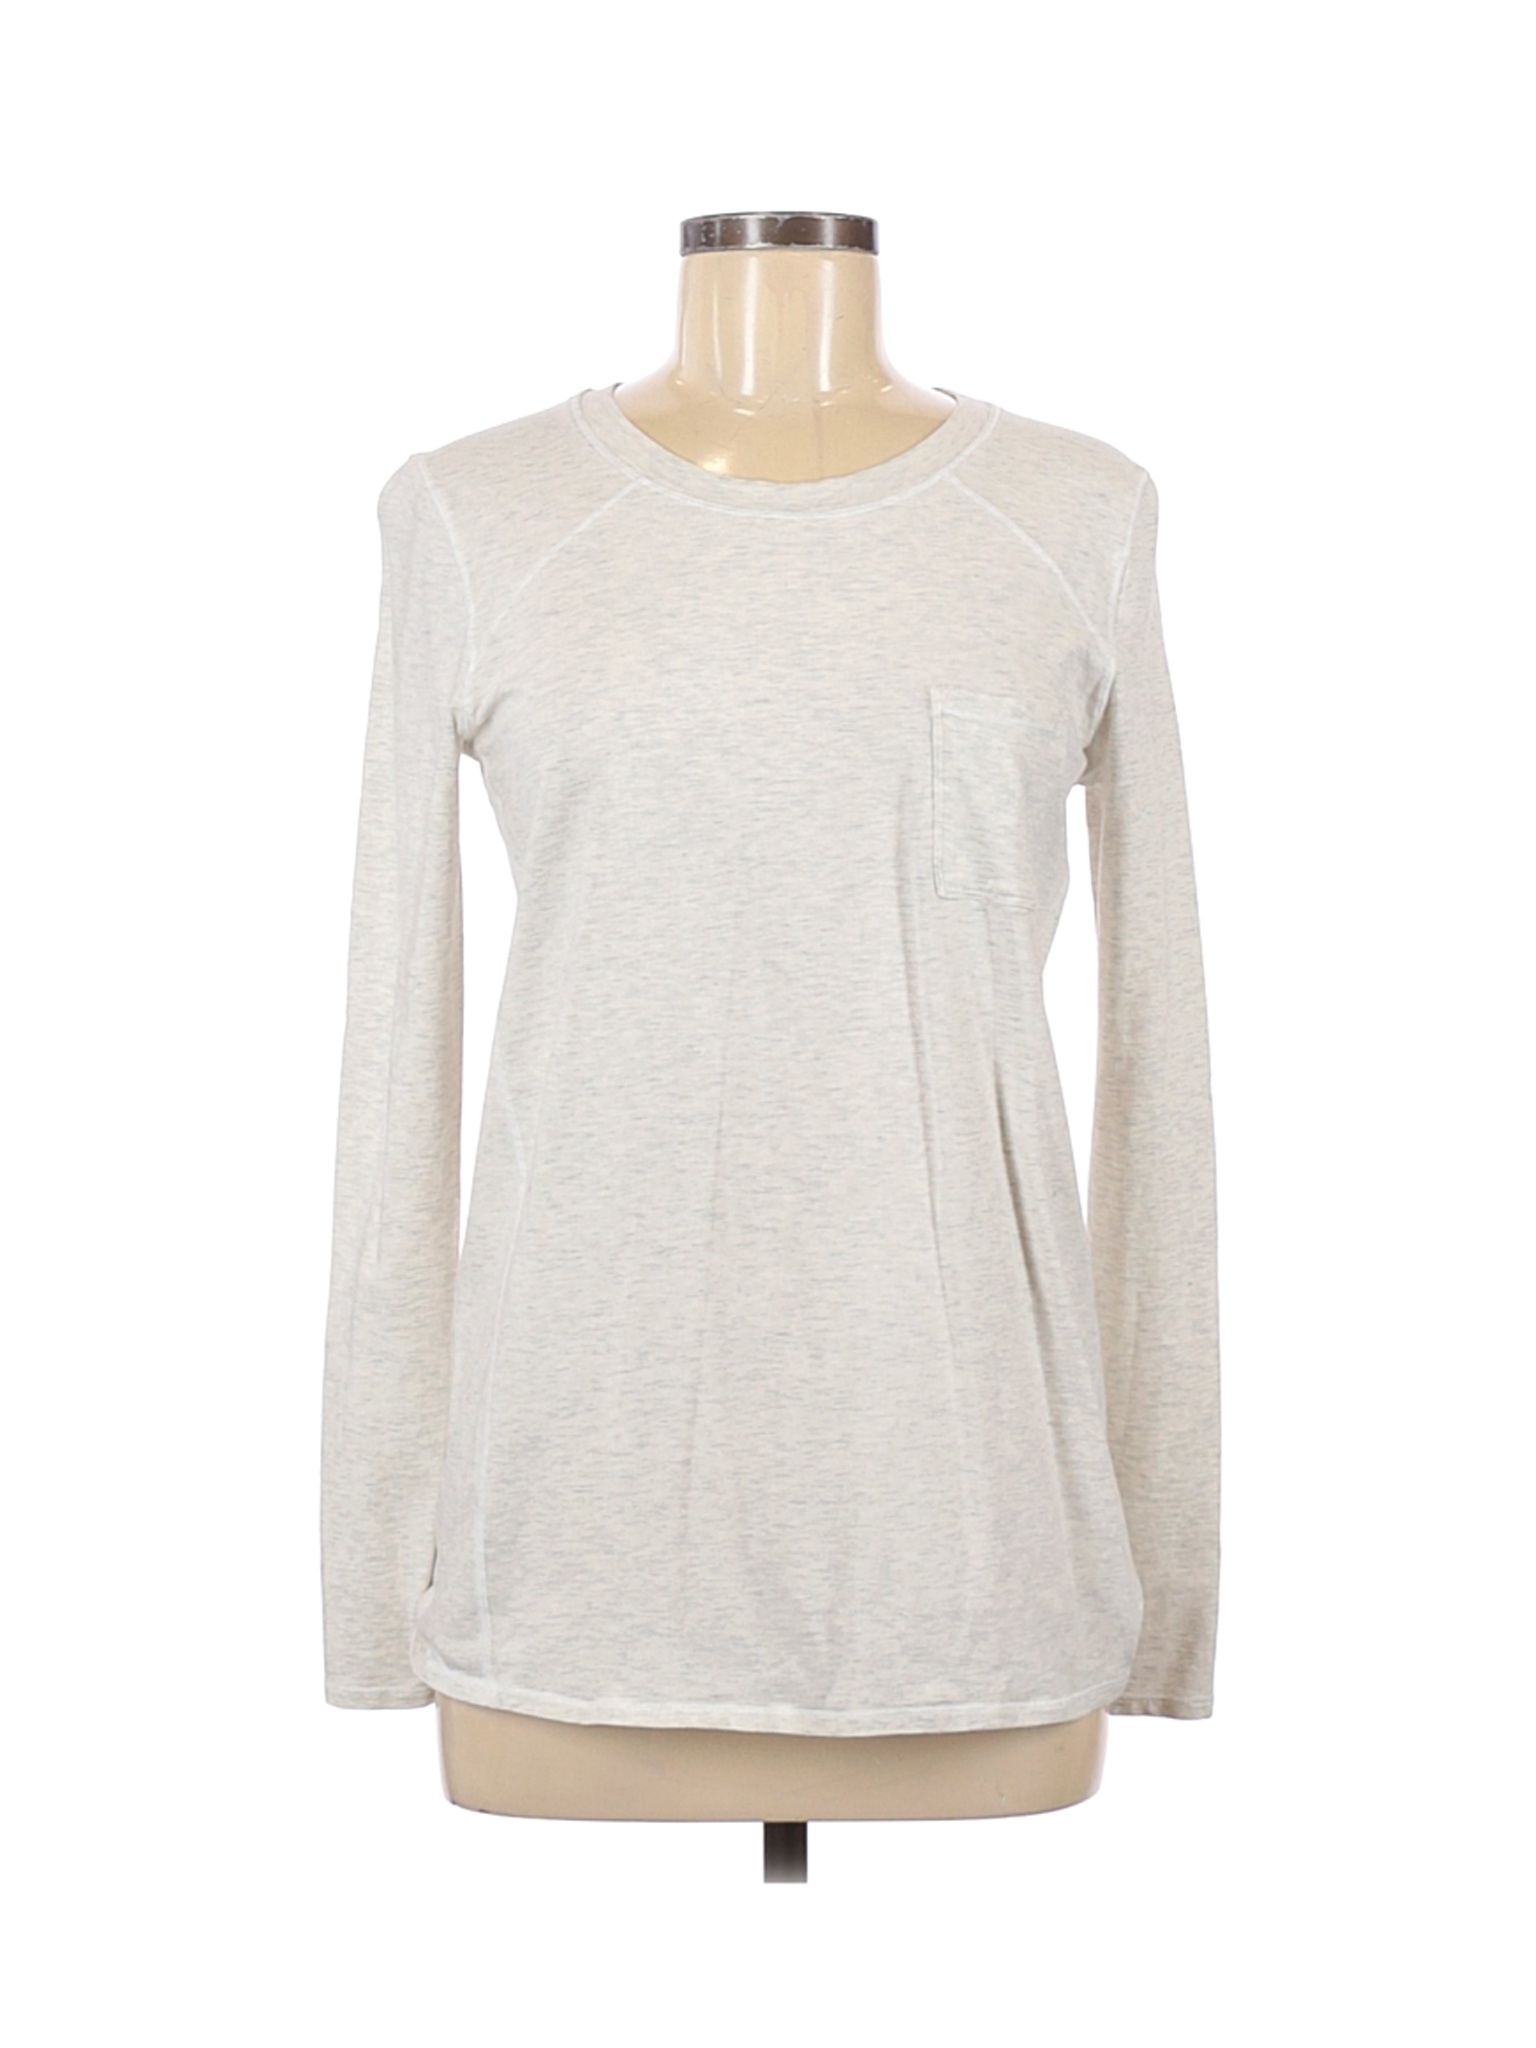 Lululemon Athletica Women Gray Long Sleeve T-Shirt 8 | eBay